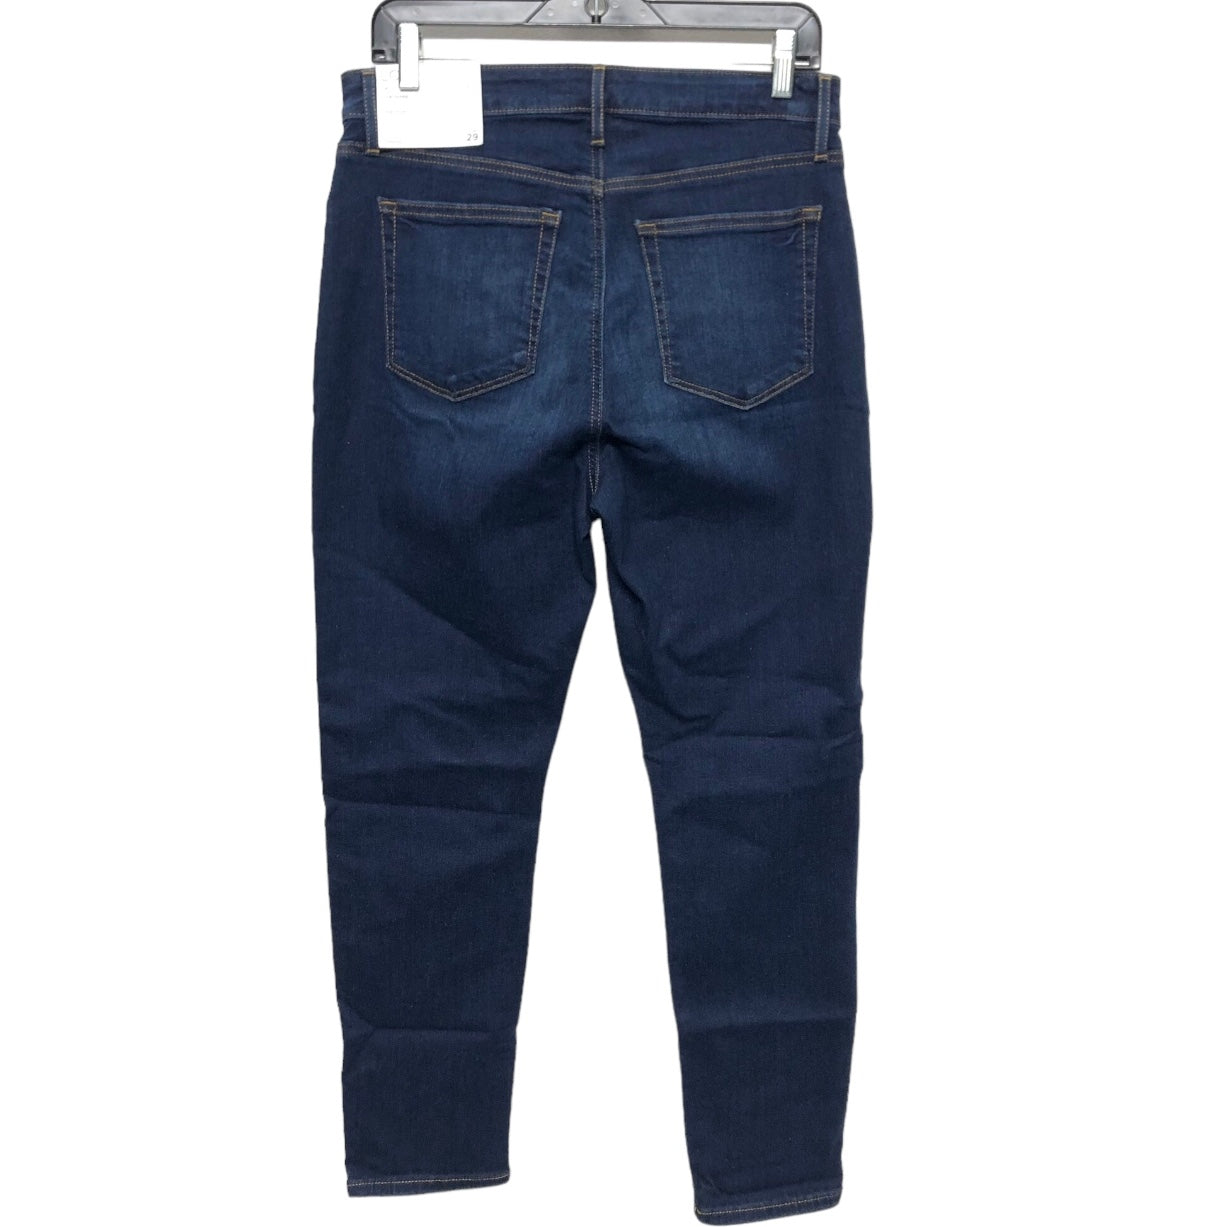 Blue Denim Jeans Skinny Loft, Size 8